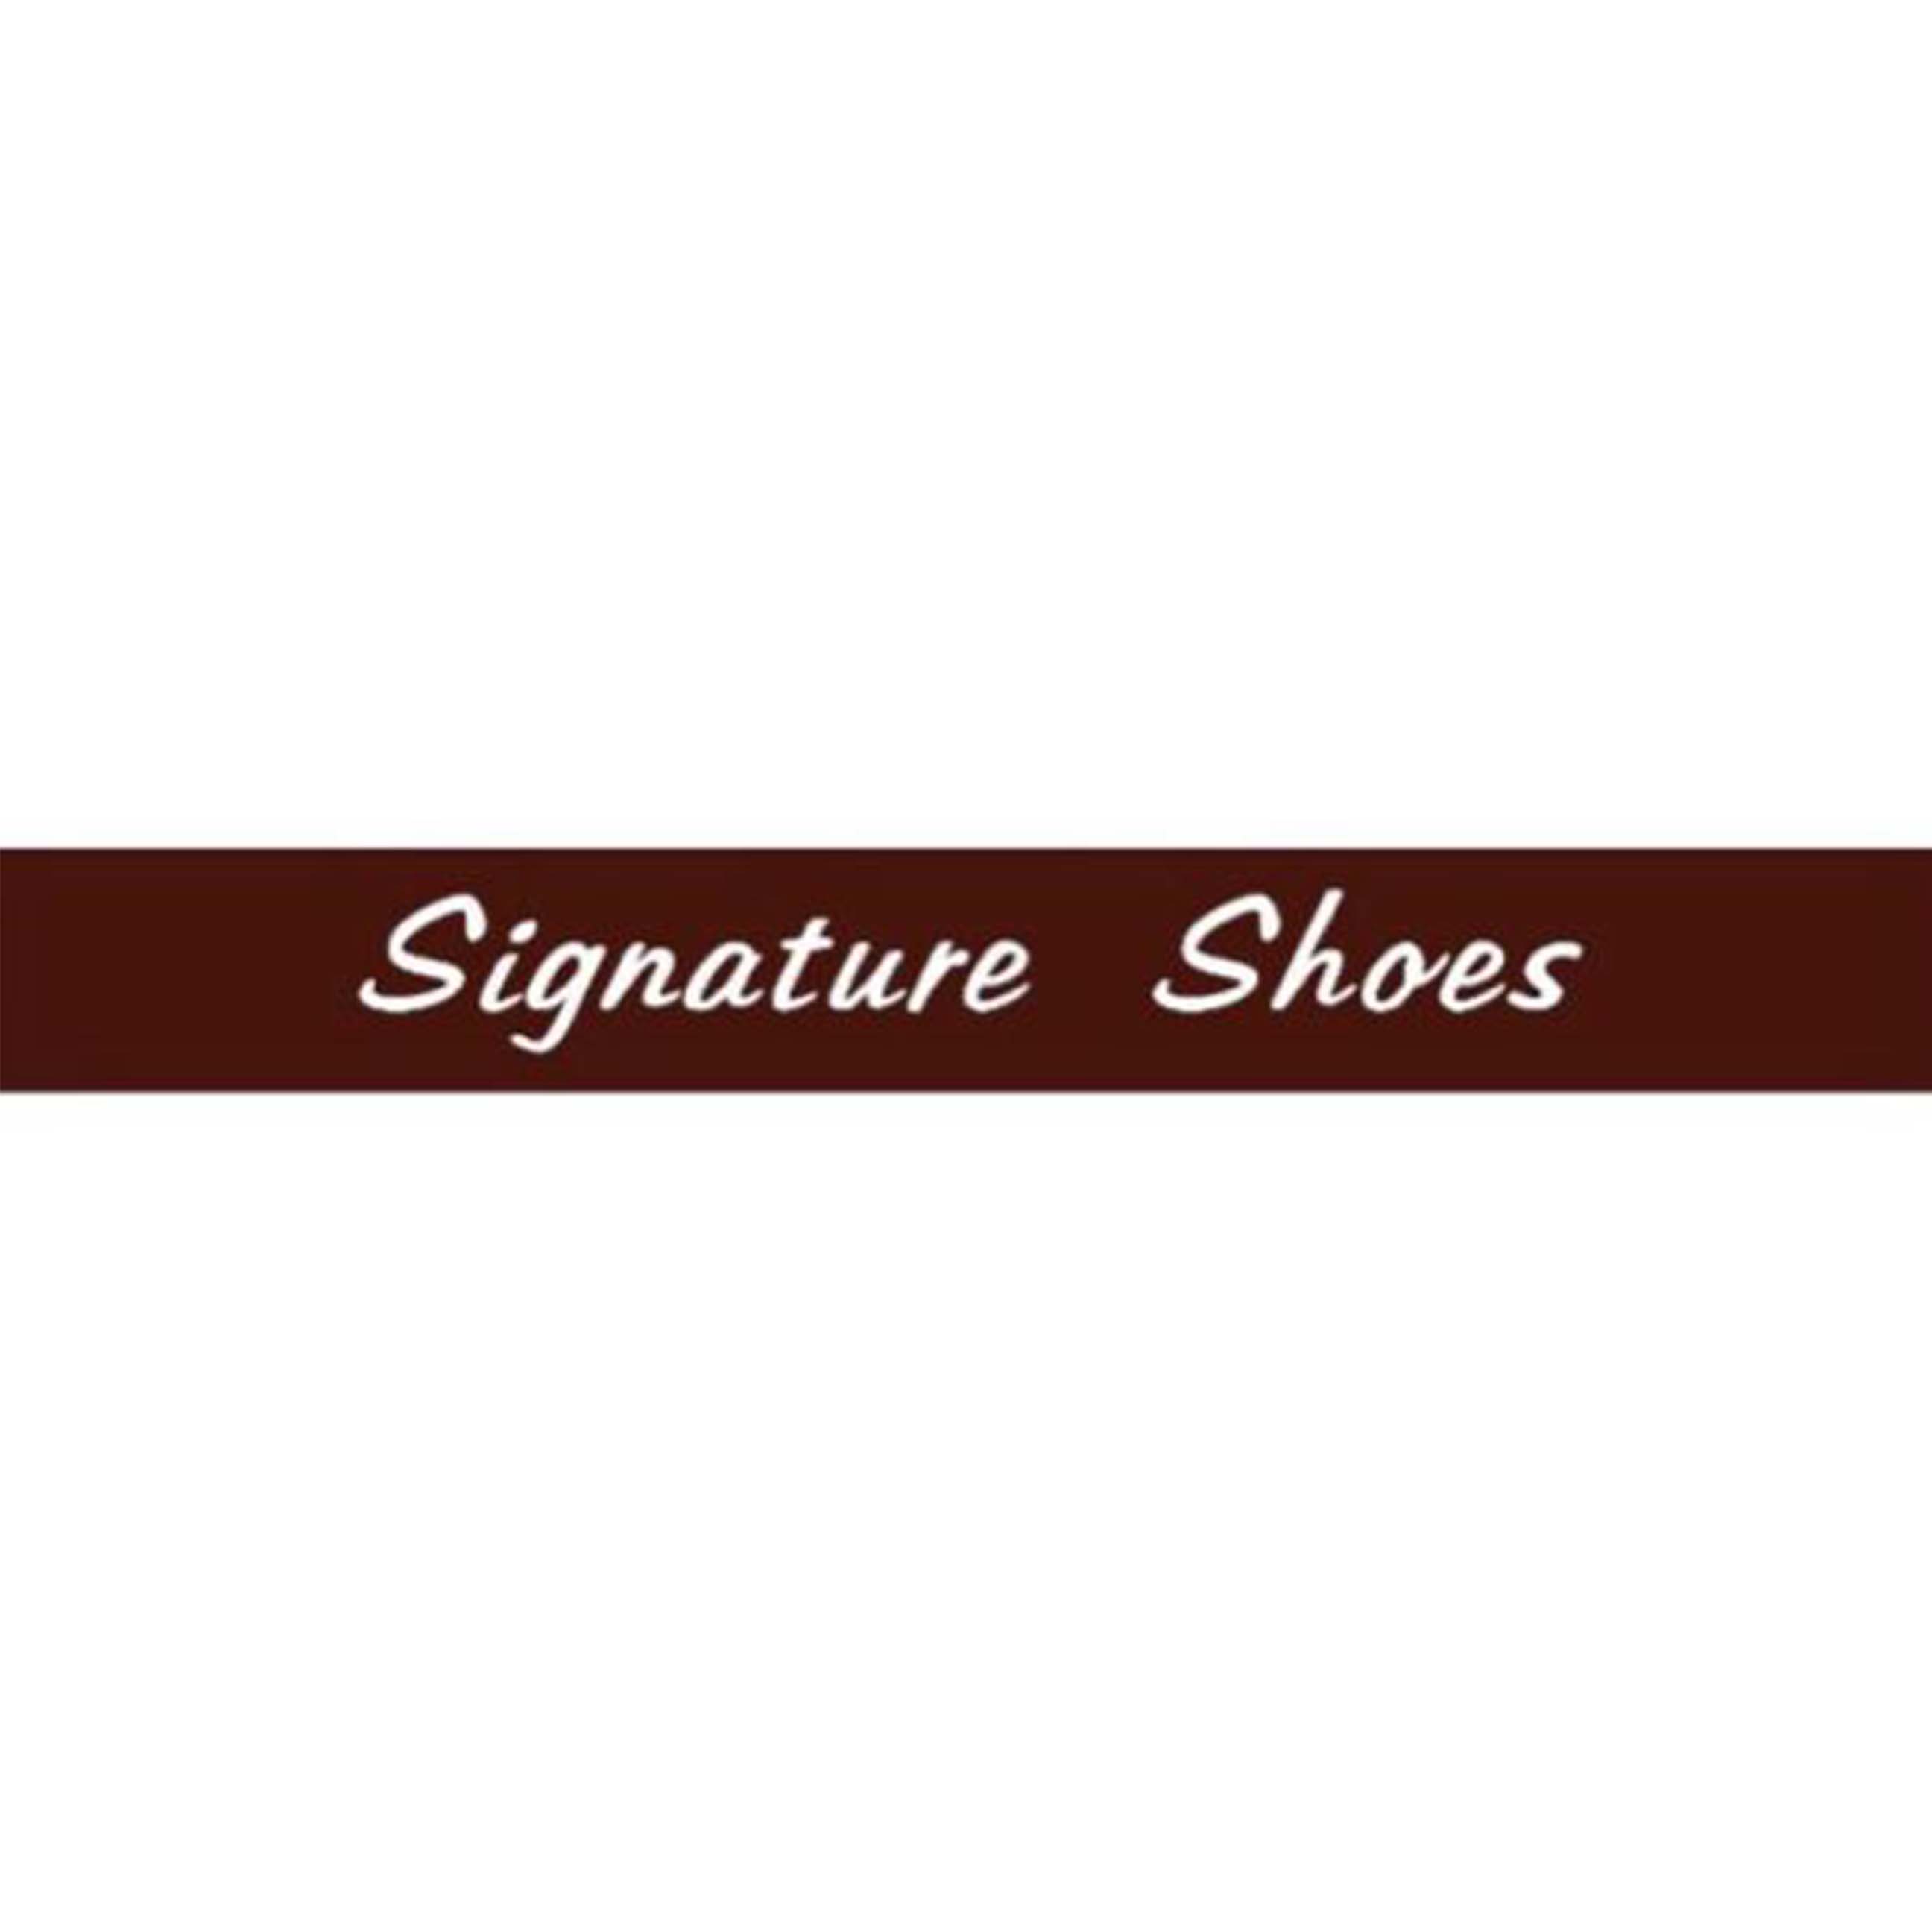 Signature Shoes